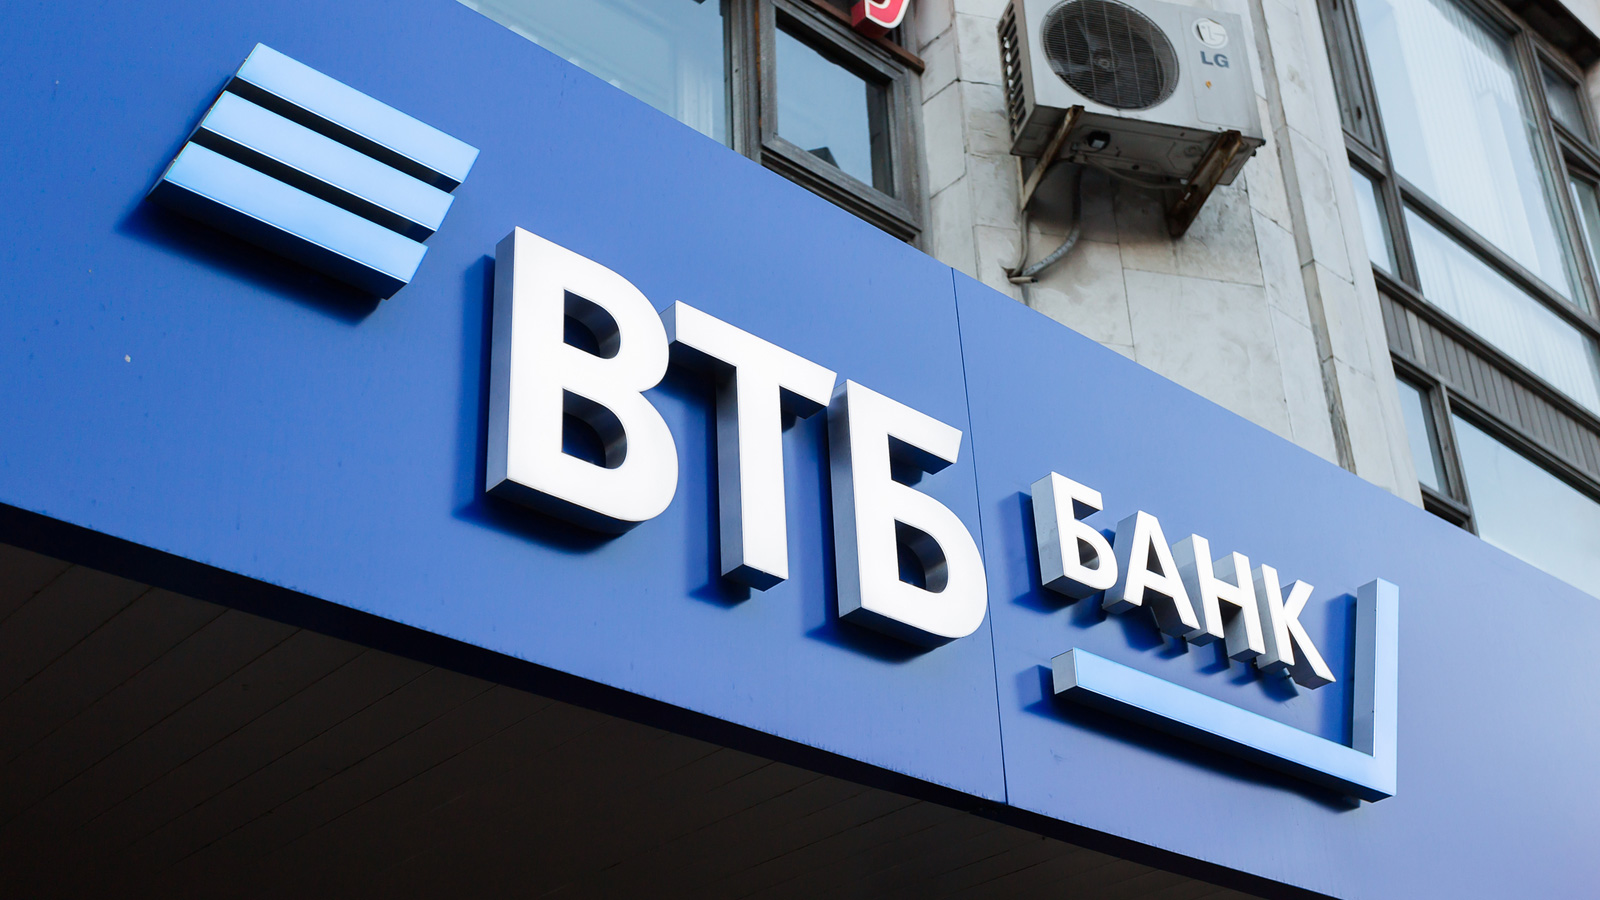 VTB Bank branch front